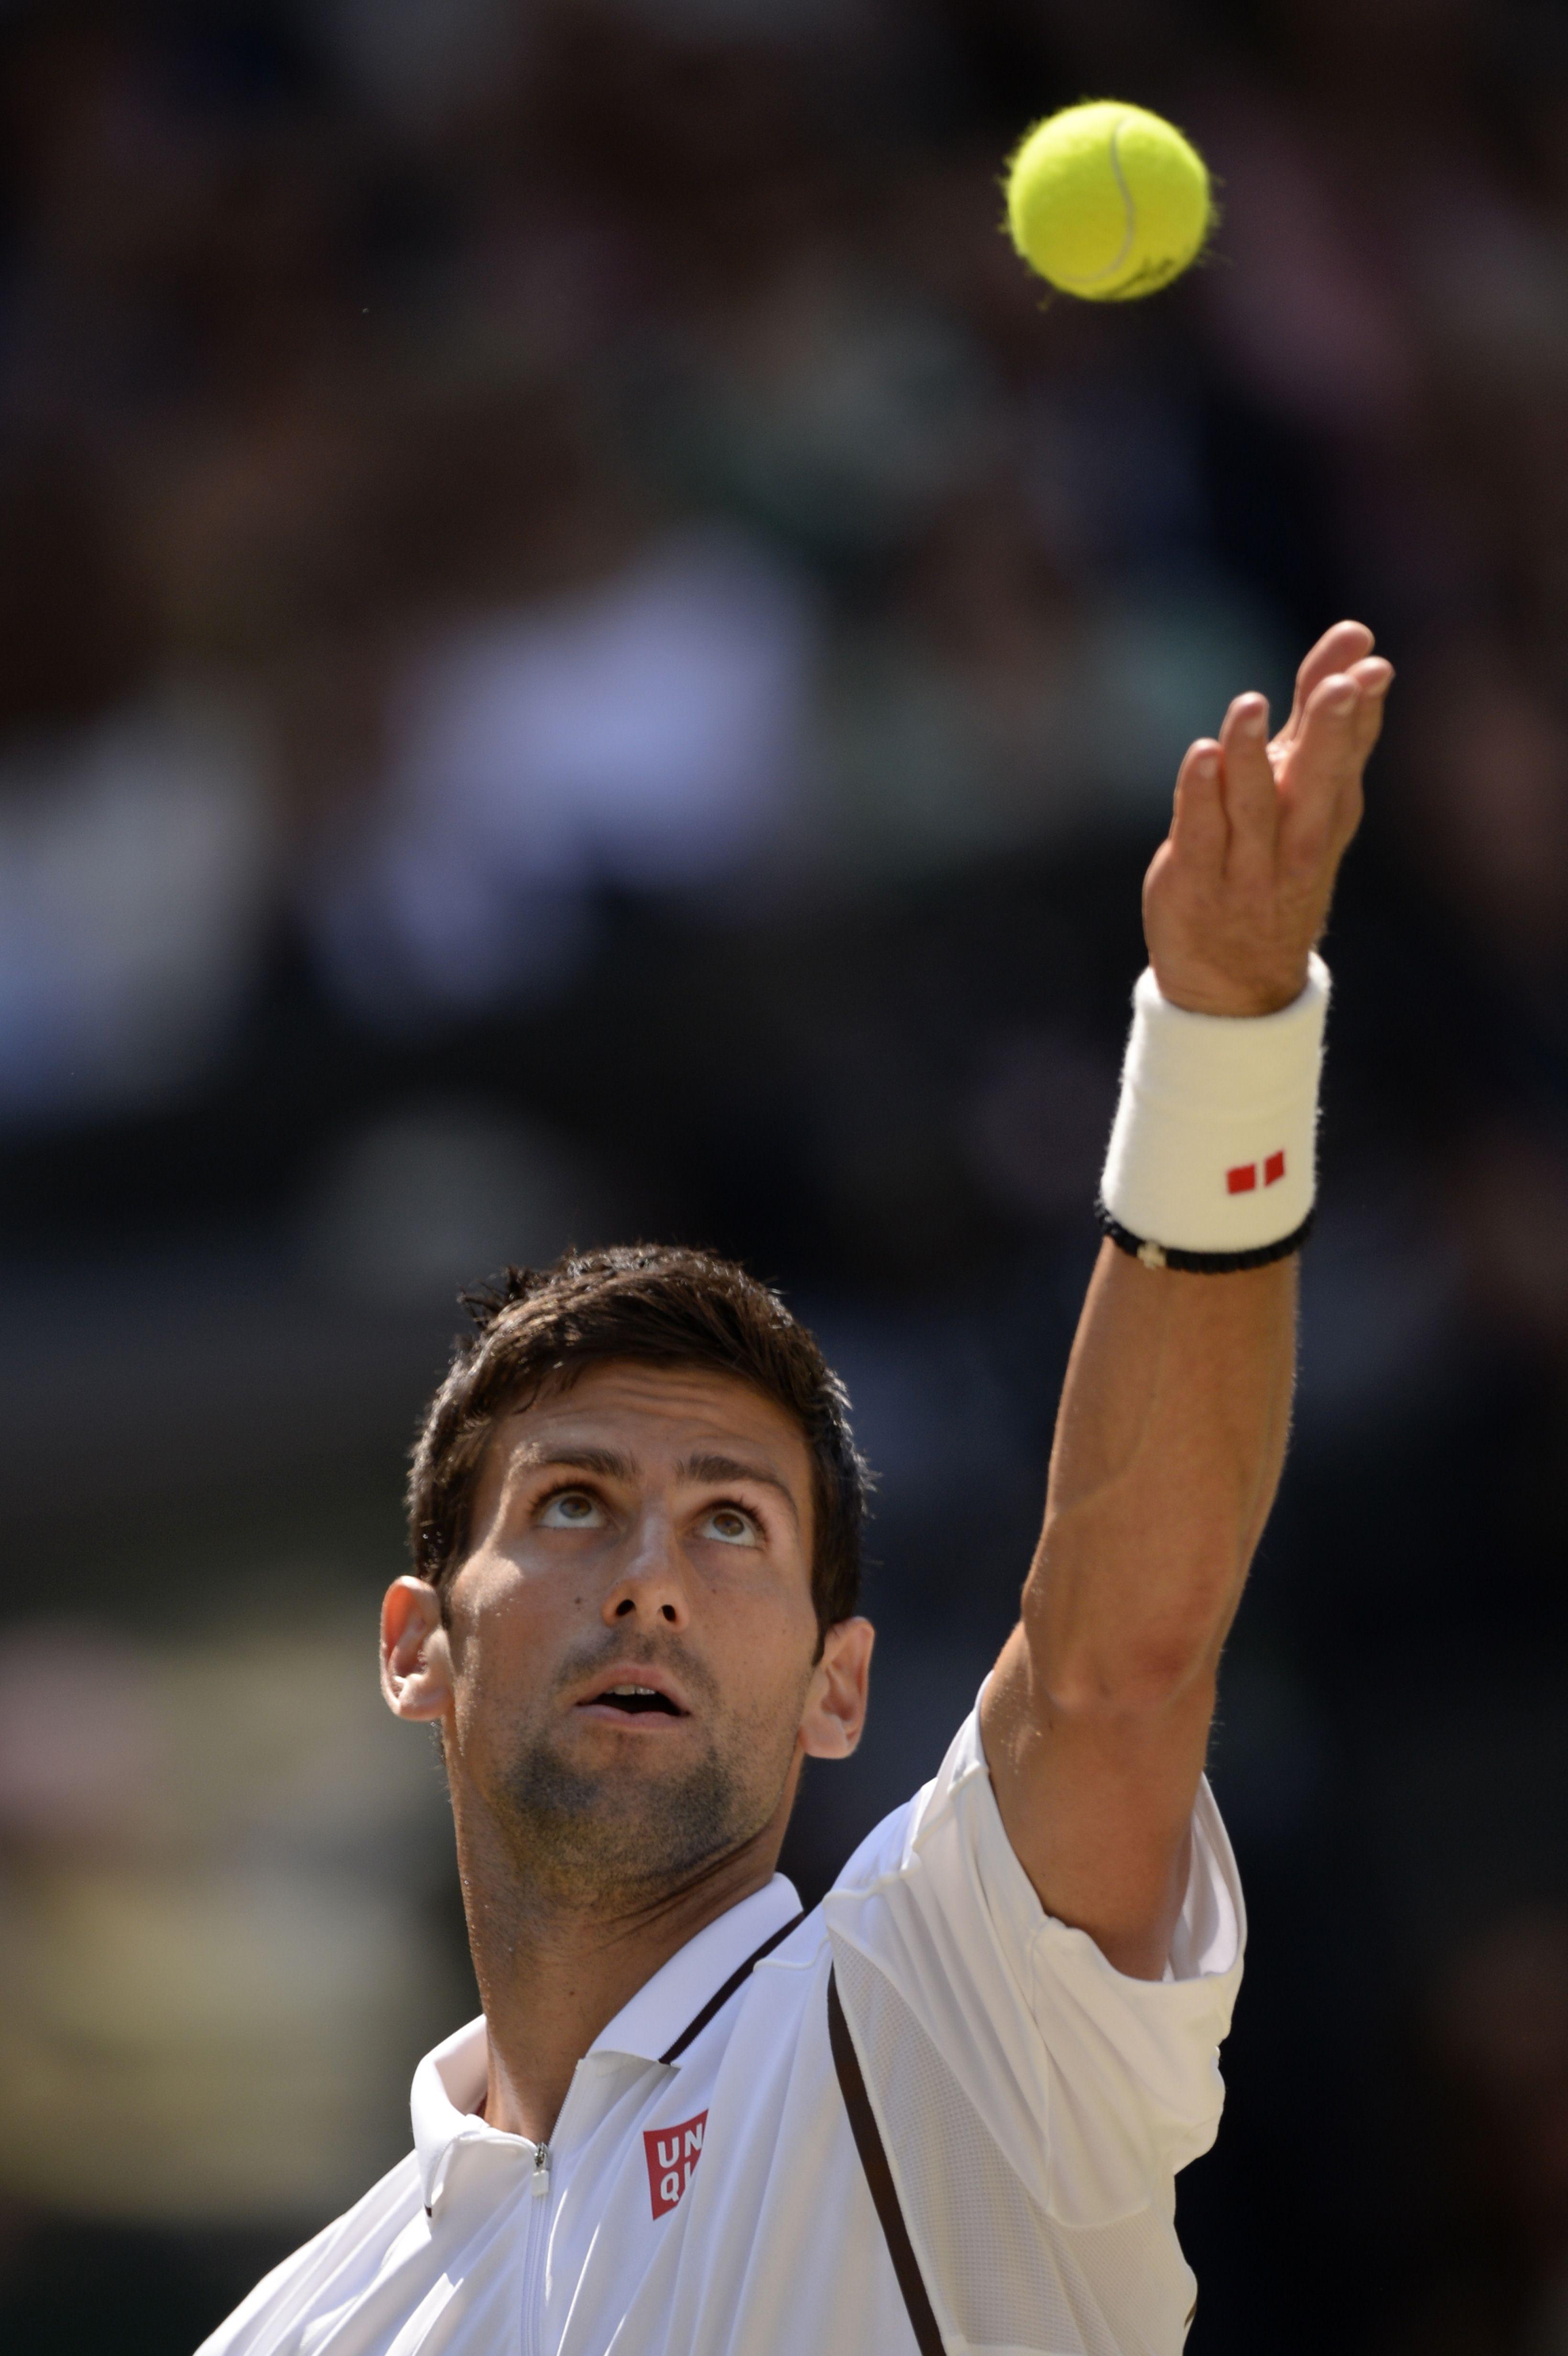 Wimbledon 2013 final: Andy Murray v Novak Djokovic